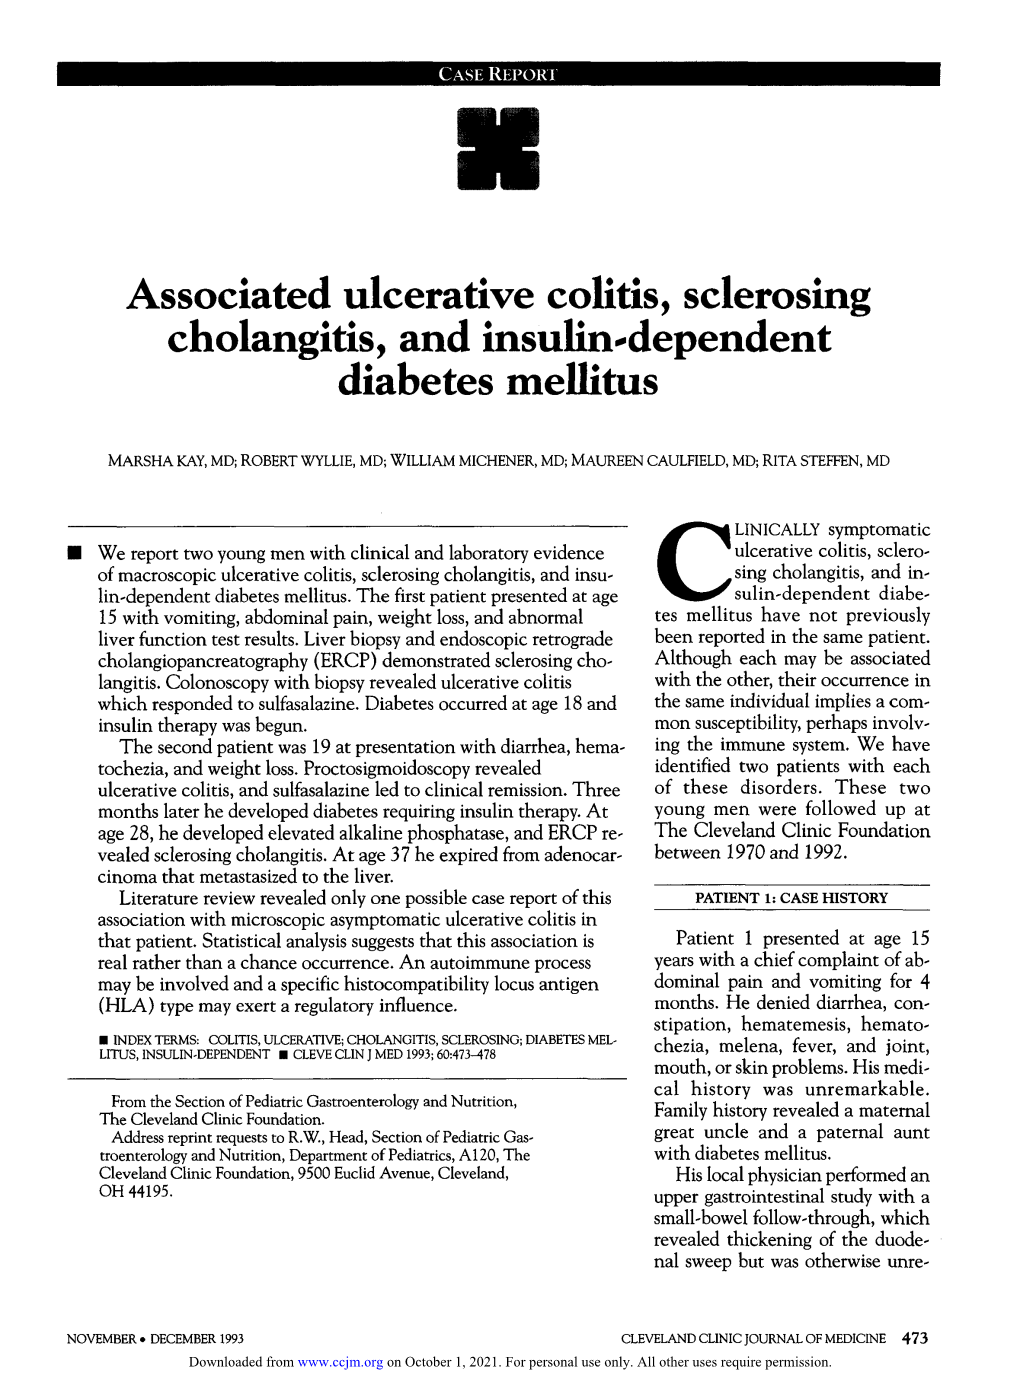 Associated Ulcerative Colitis, Sclerosing Cholangitis, and Insulin*Dependent Diabetes Mellitus